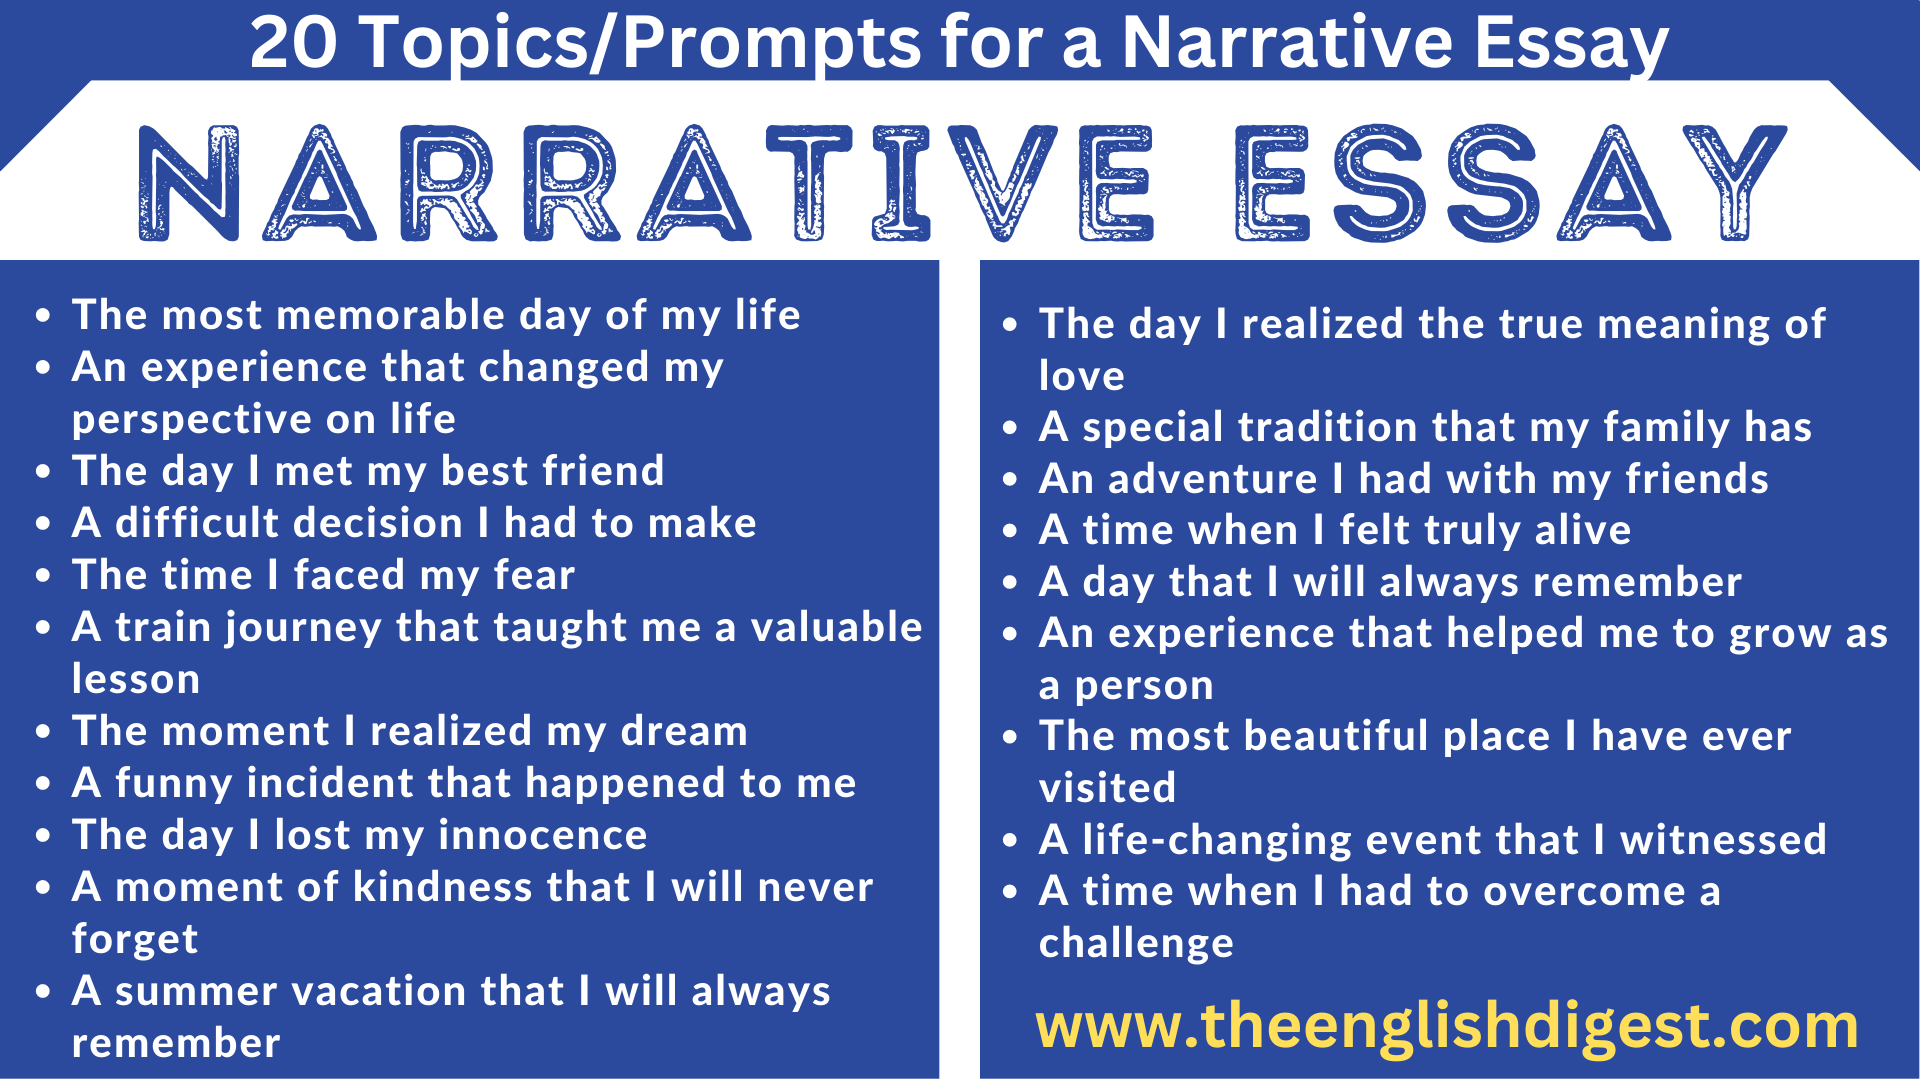 a narrative essay should limit the use of verbs